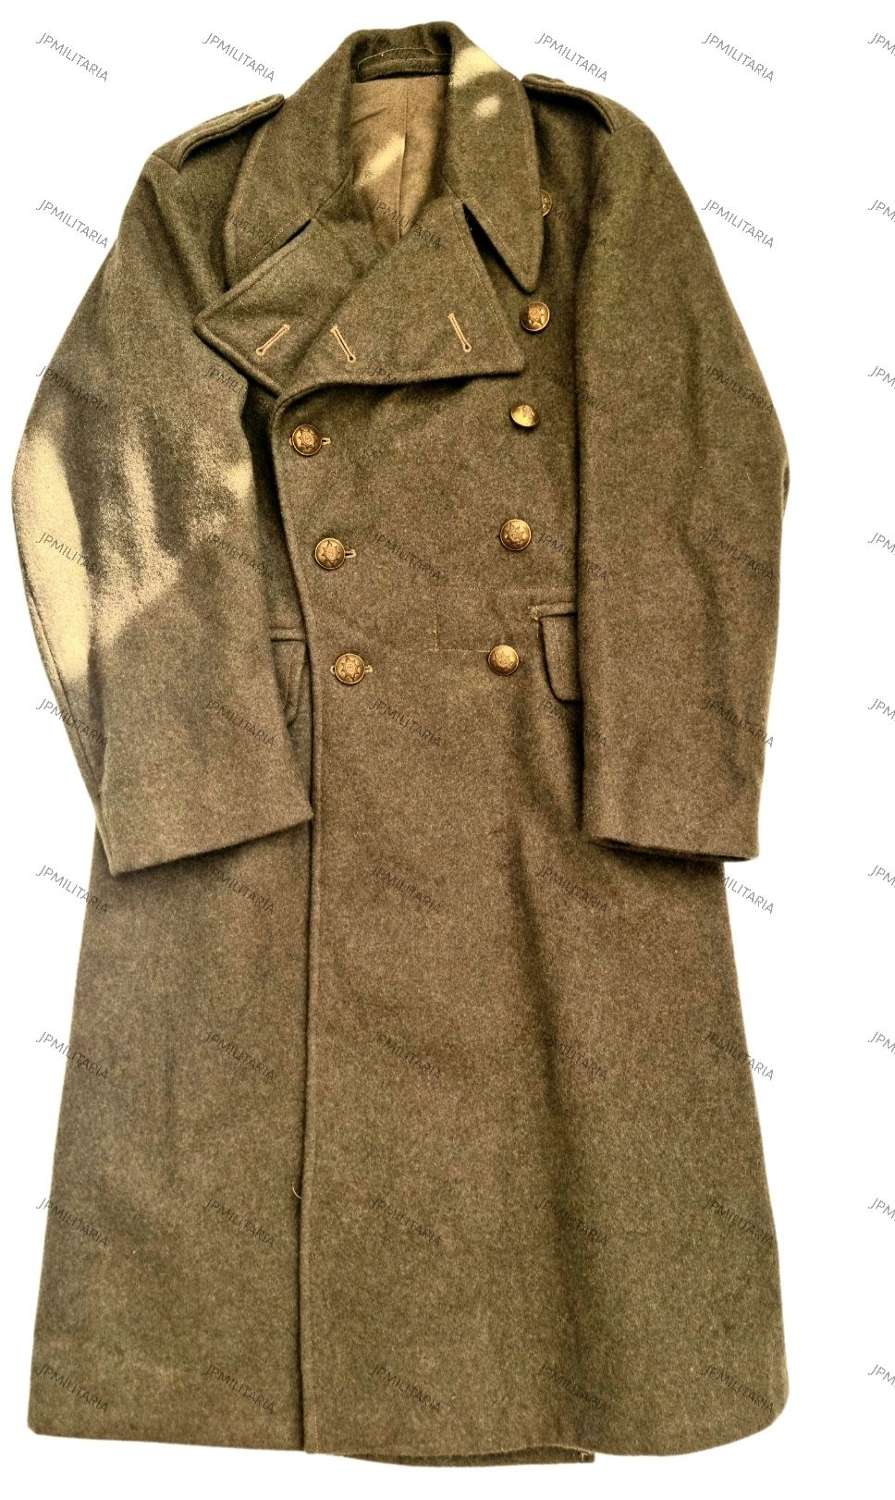 British Army 1950s greatcoat